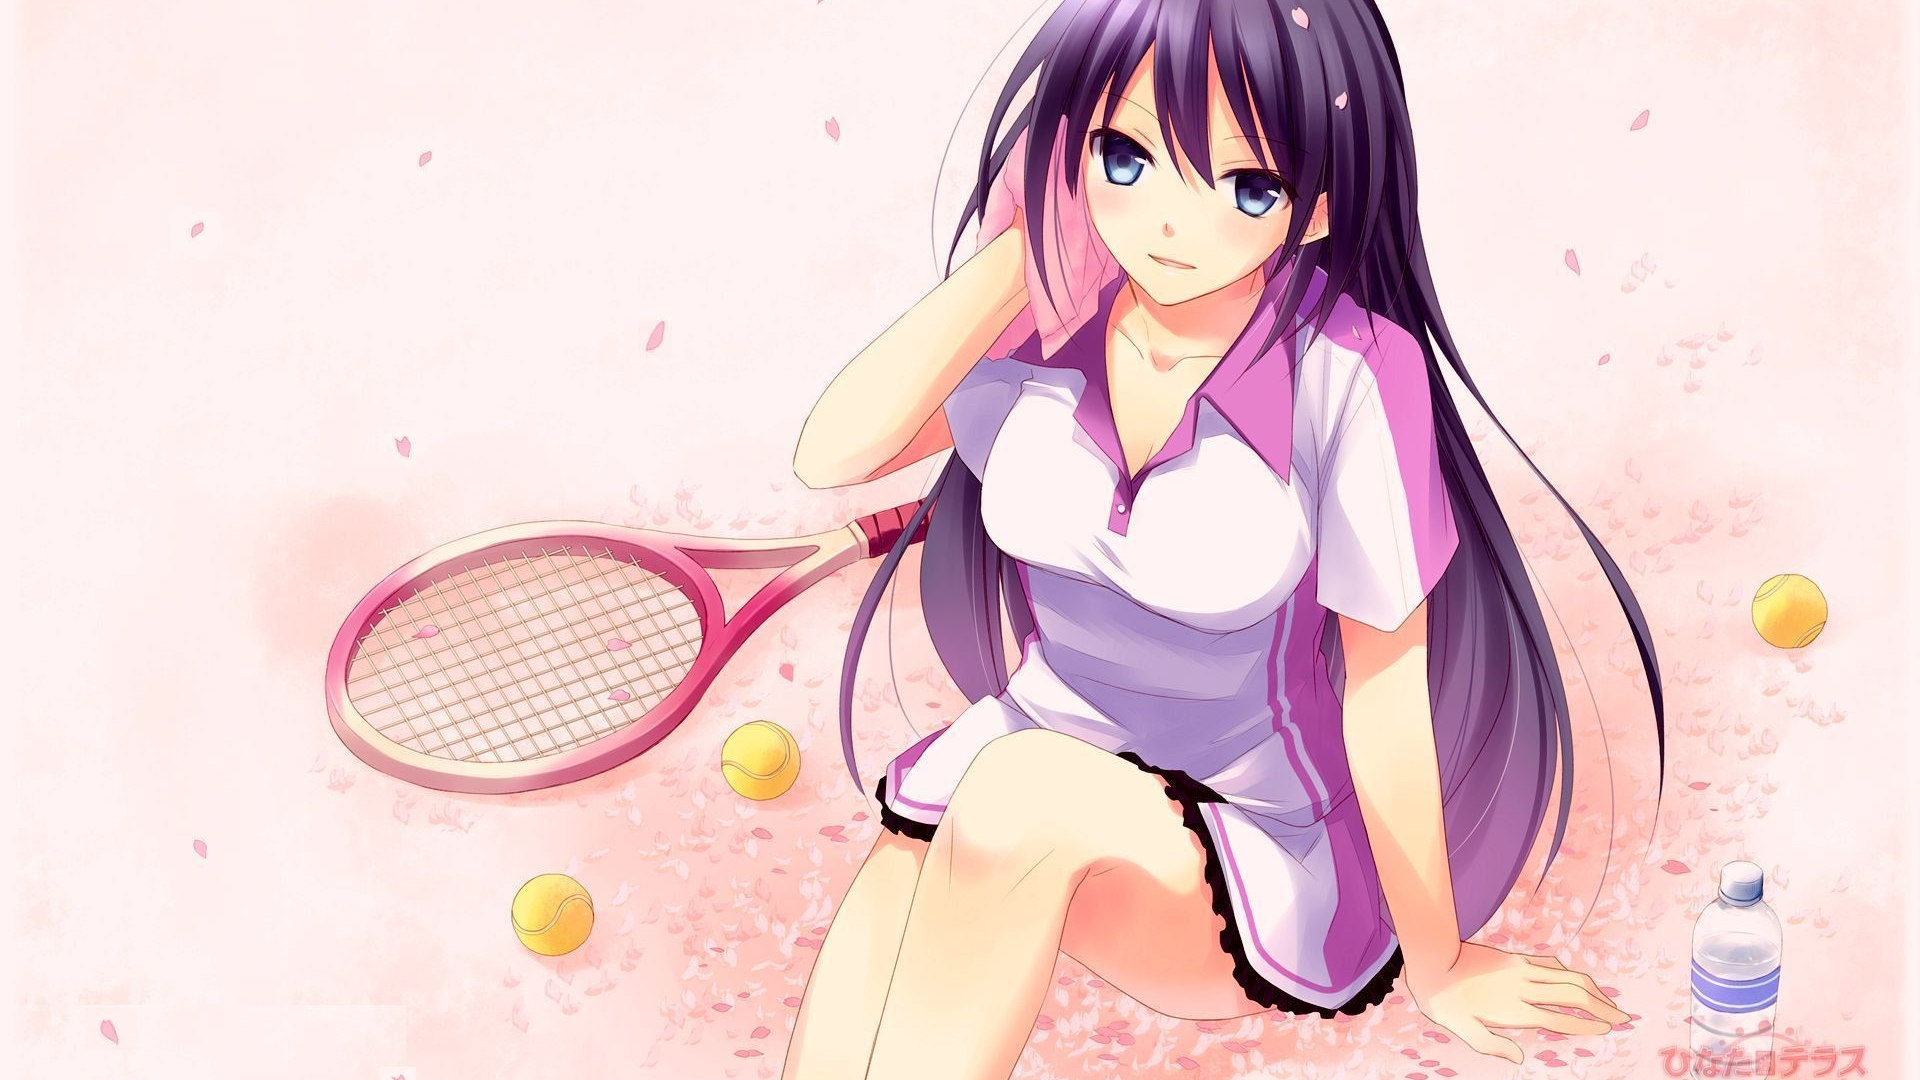 платье, tennis girl, мячики, аниме, теннисистка, девушка, ракетка, полотенце, лепестки, арт, розовые, спорт